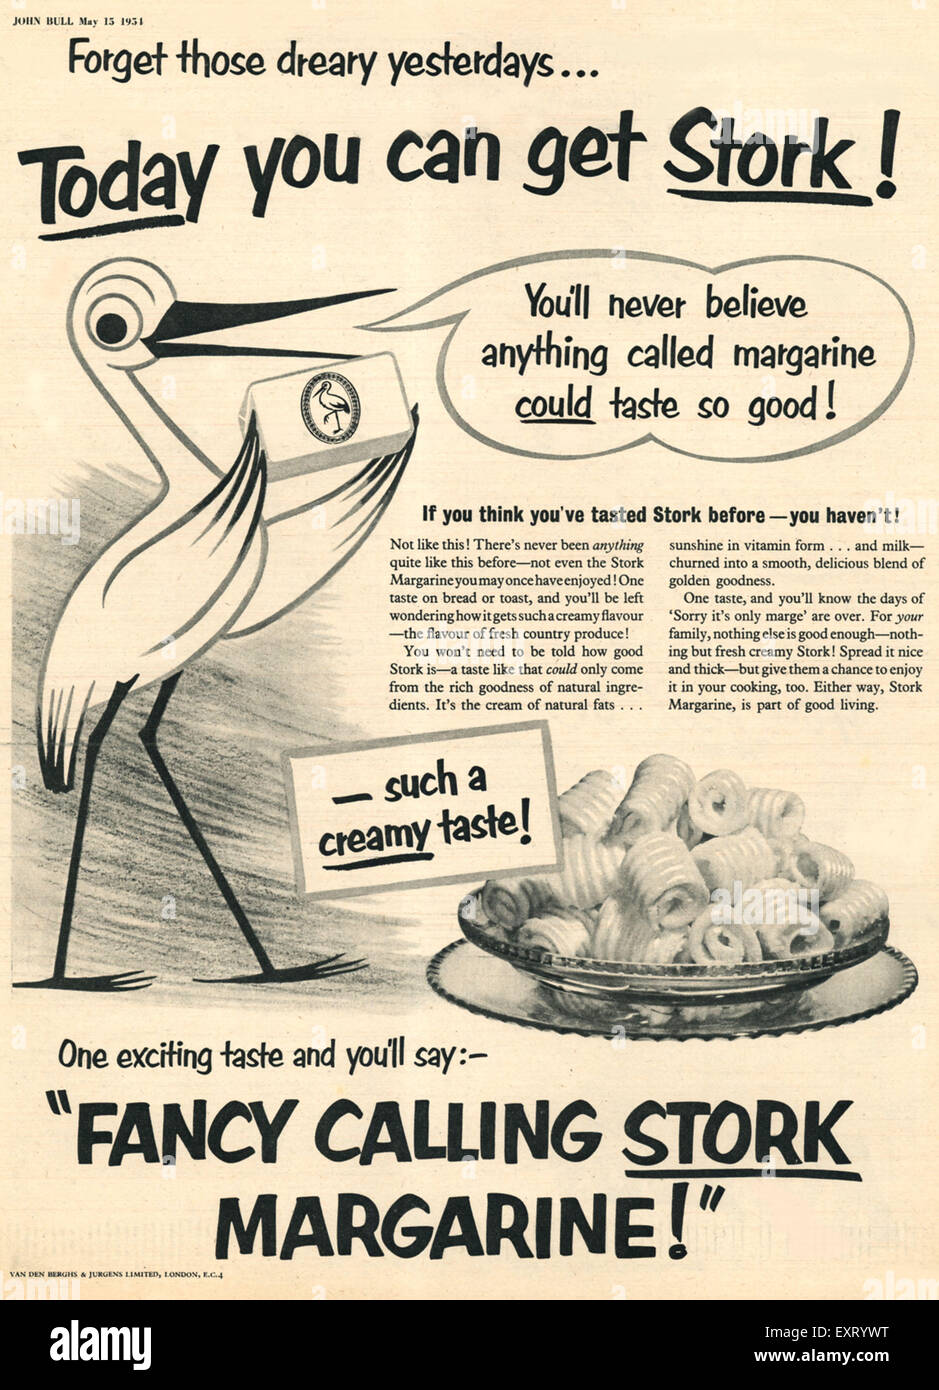 Image result for Stork margarine 1950's adverts